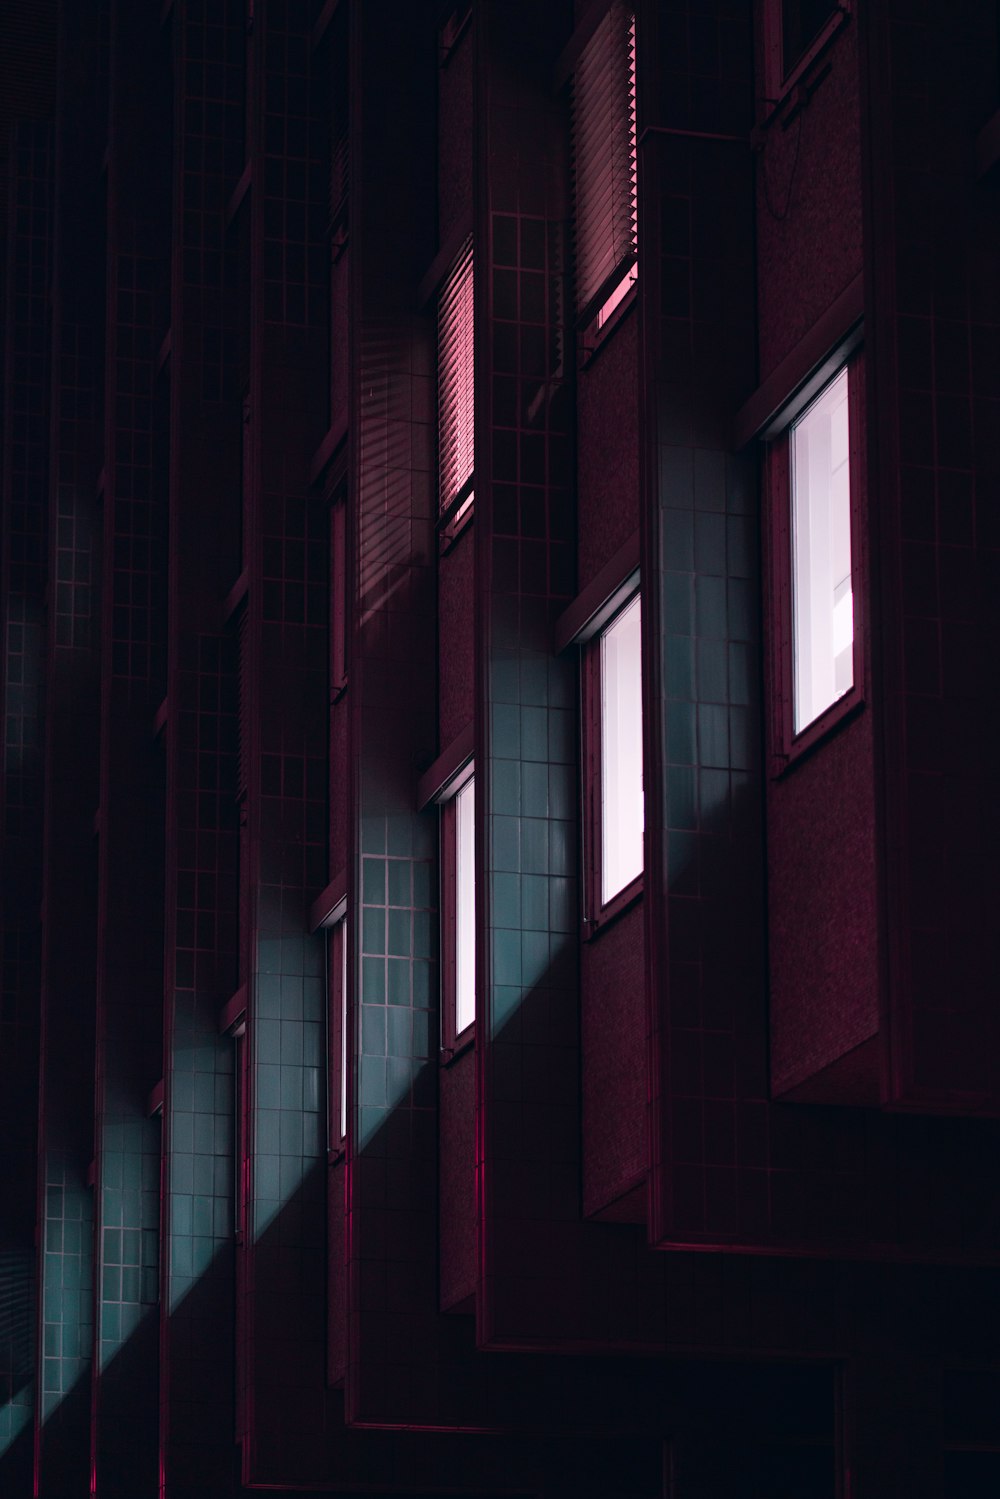 a row of windows in a dark building